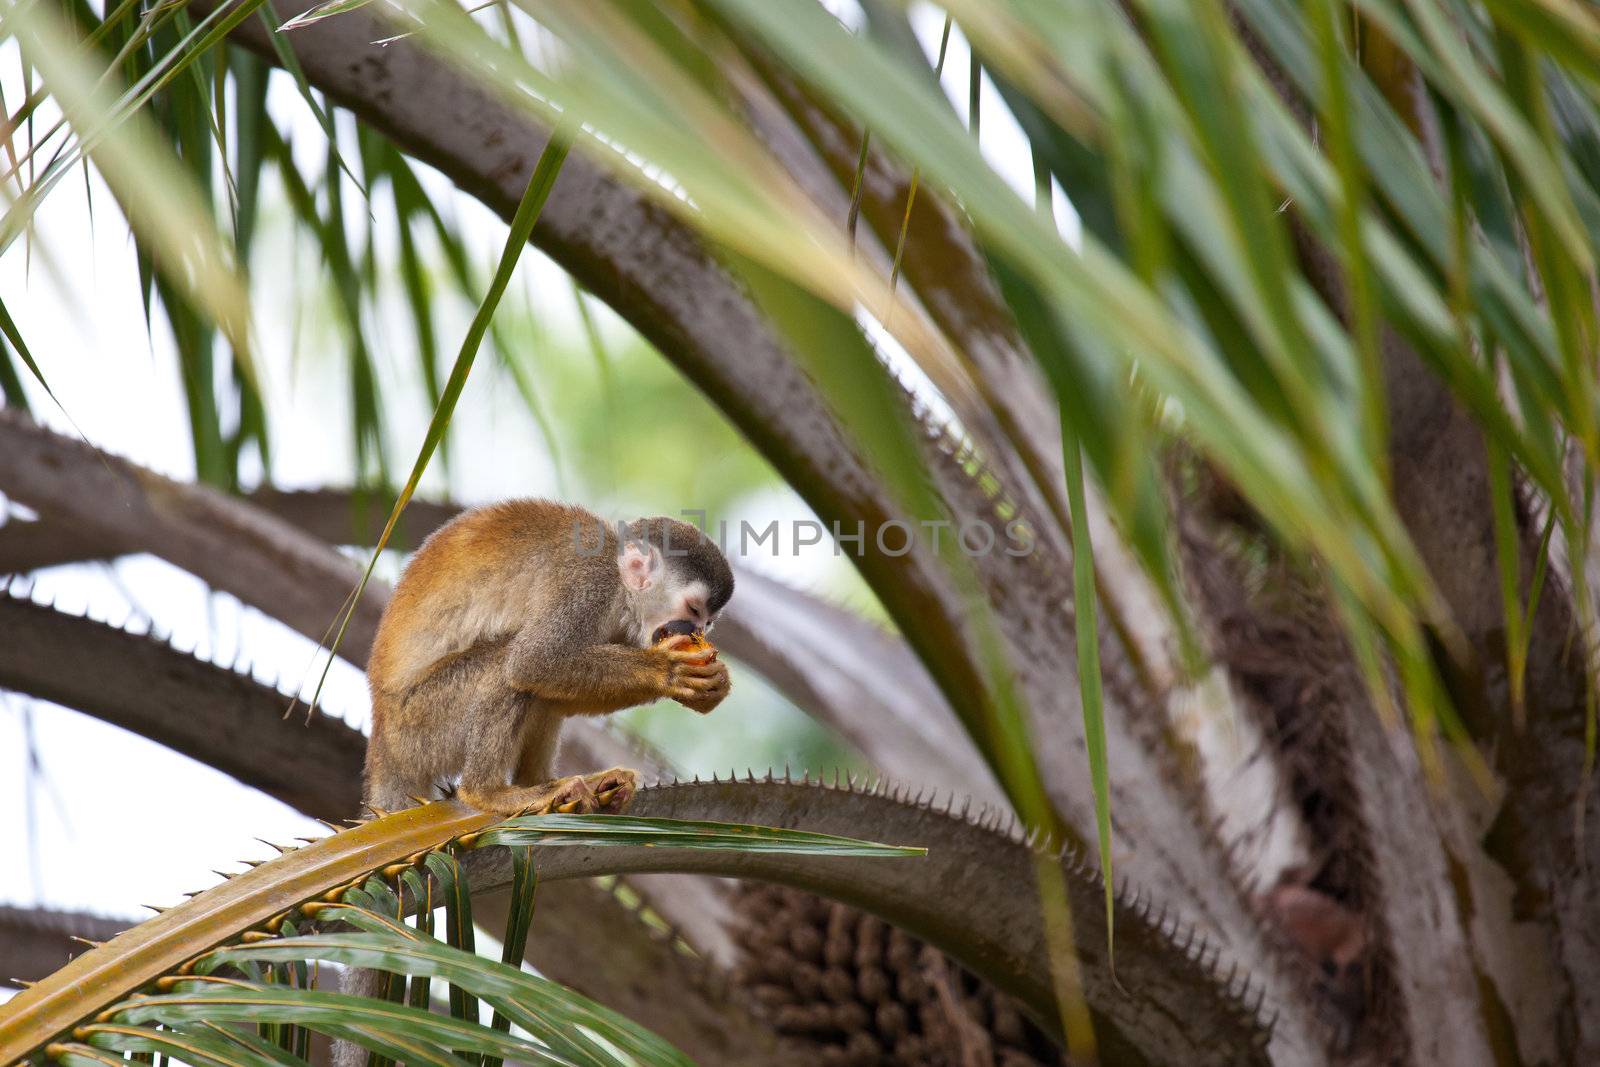 Squirrel monkey eating by Fotosmurf